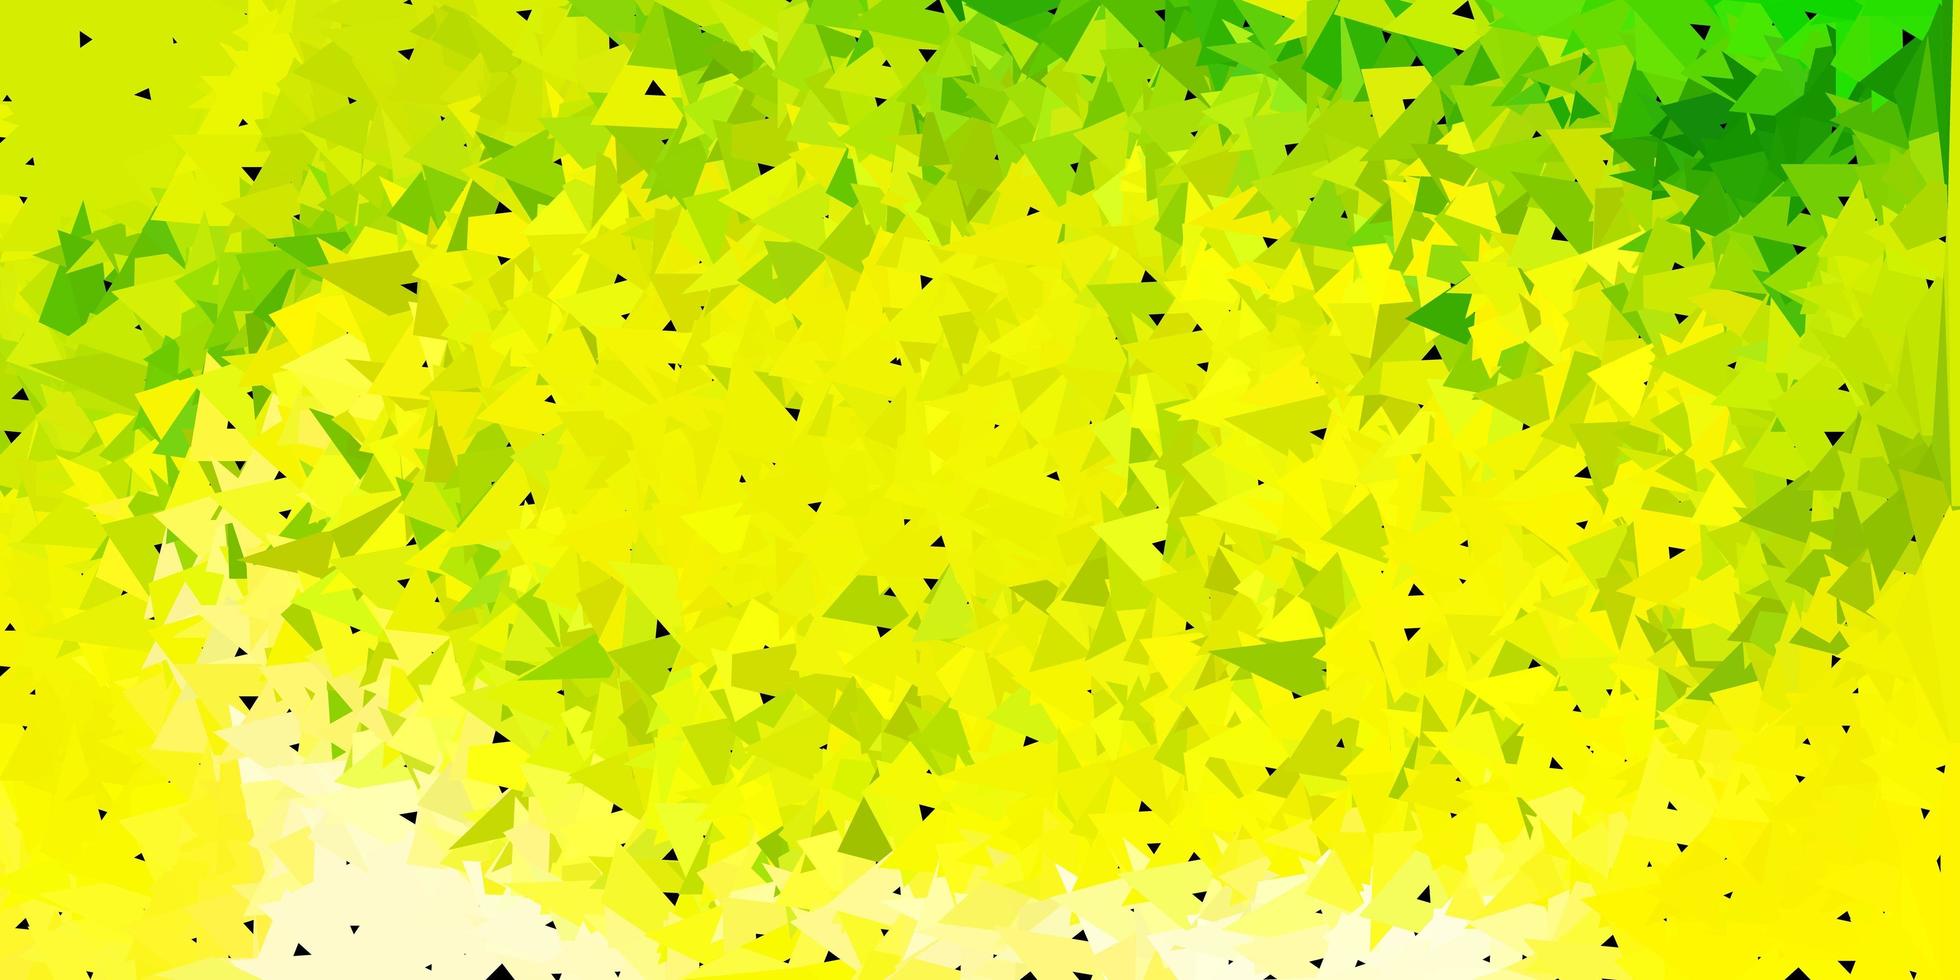 ljusgrön, gul vektor poly triangel konsistens.